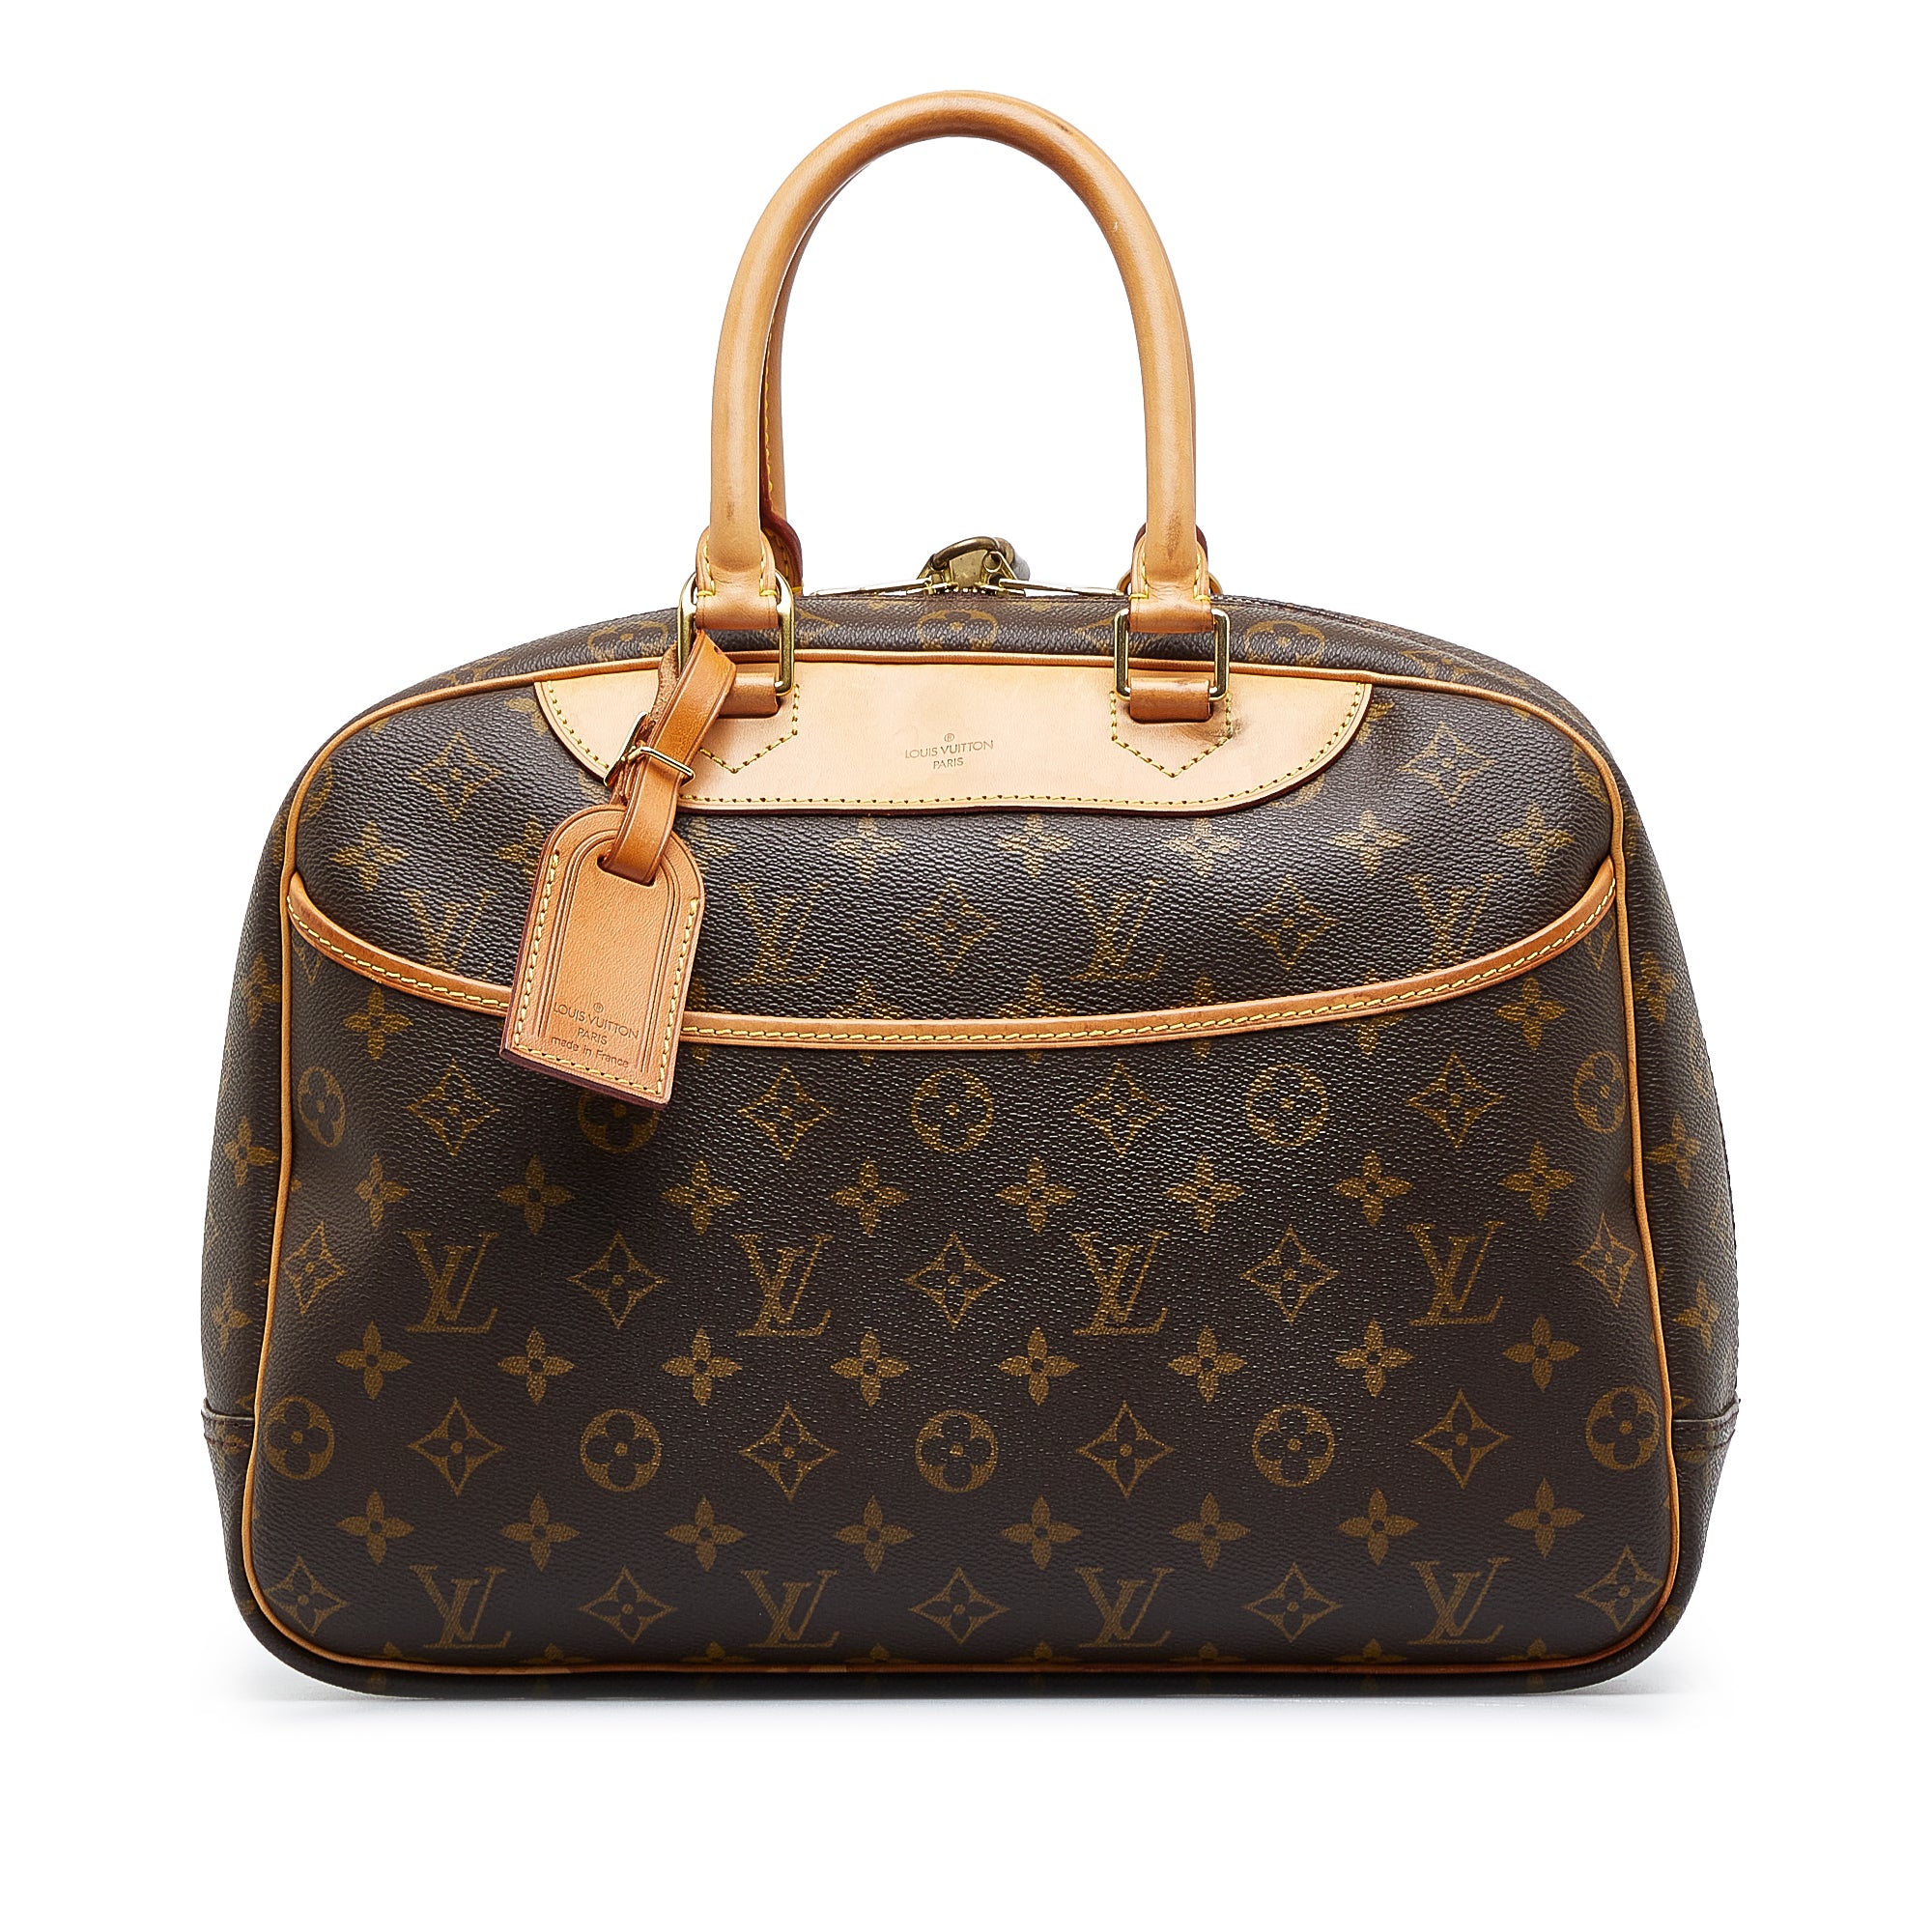 Louis Vuitton monogram Deauville handbag